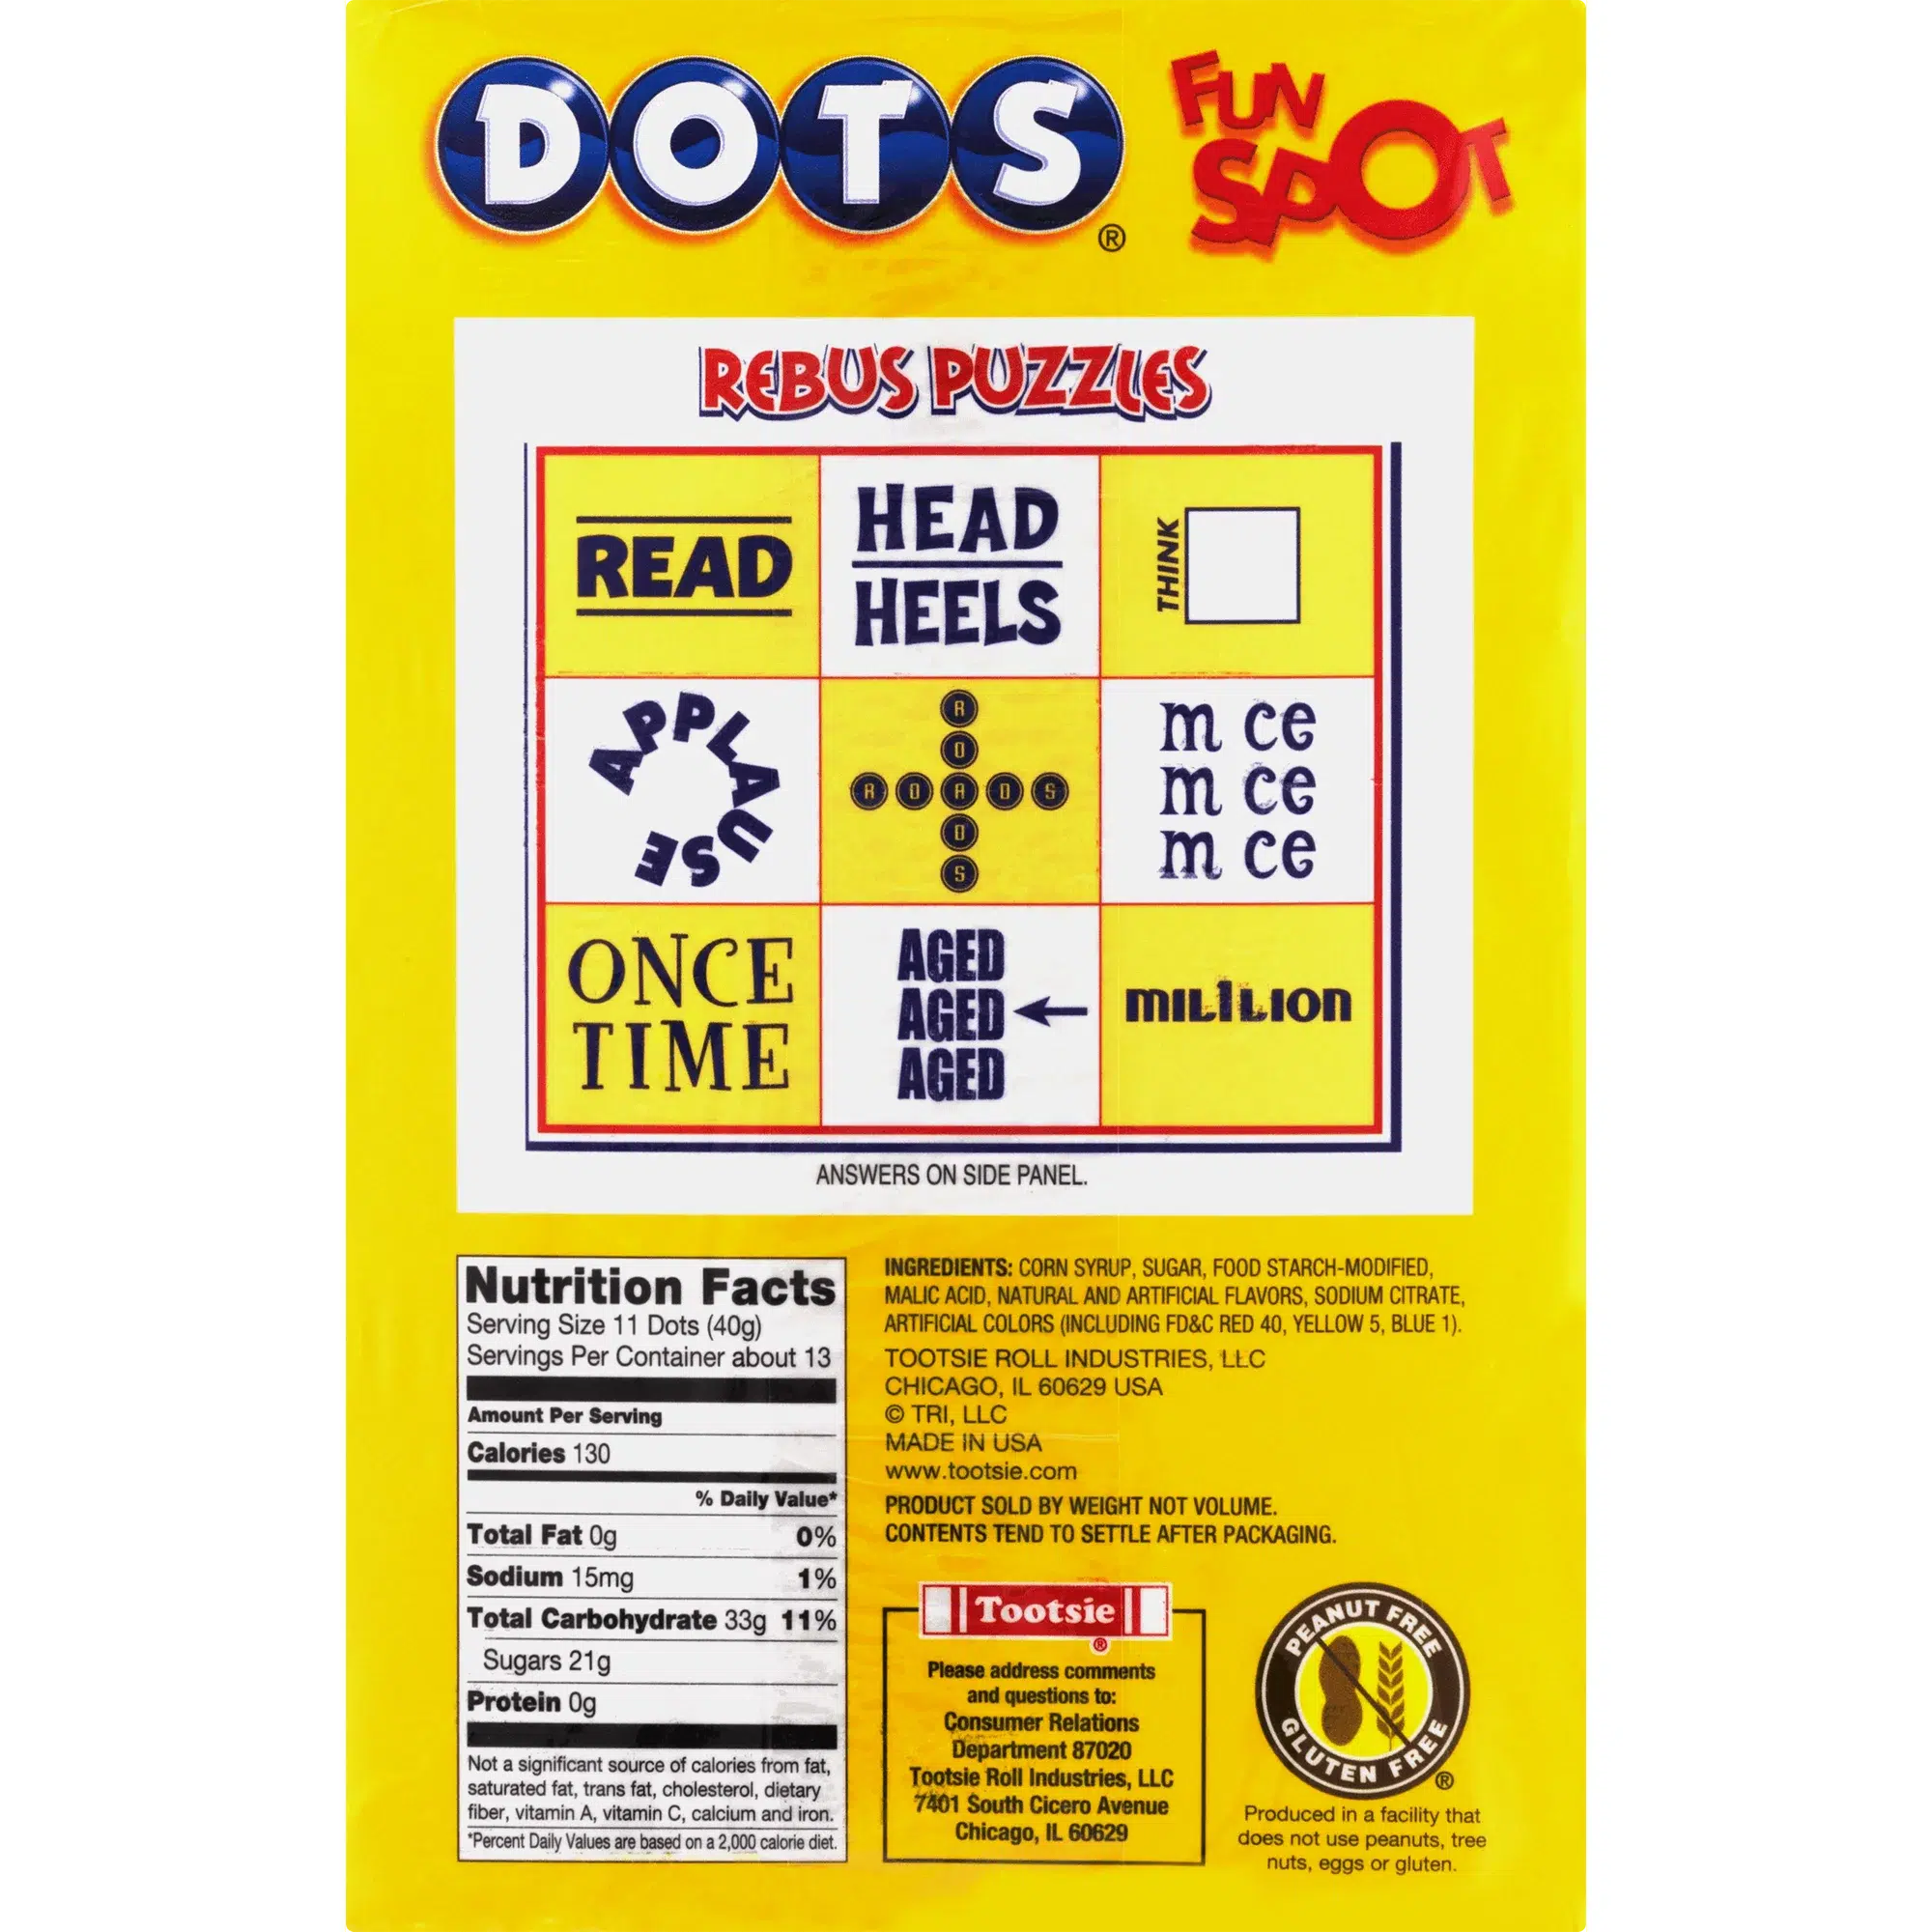 Tootsie-Super Size DOTS Original Fruit Flavored Gum Drops 17.8 oz. Box--Legacy Toys